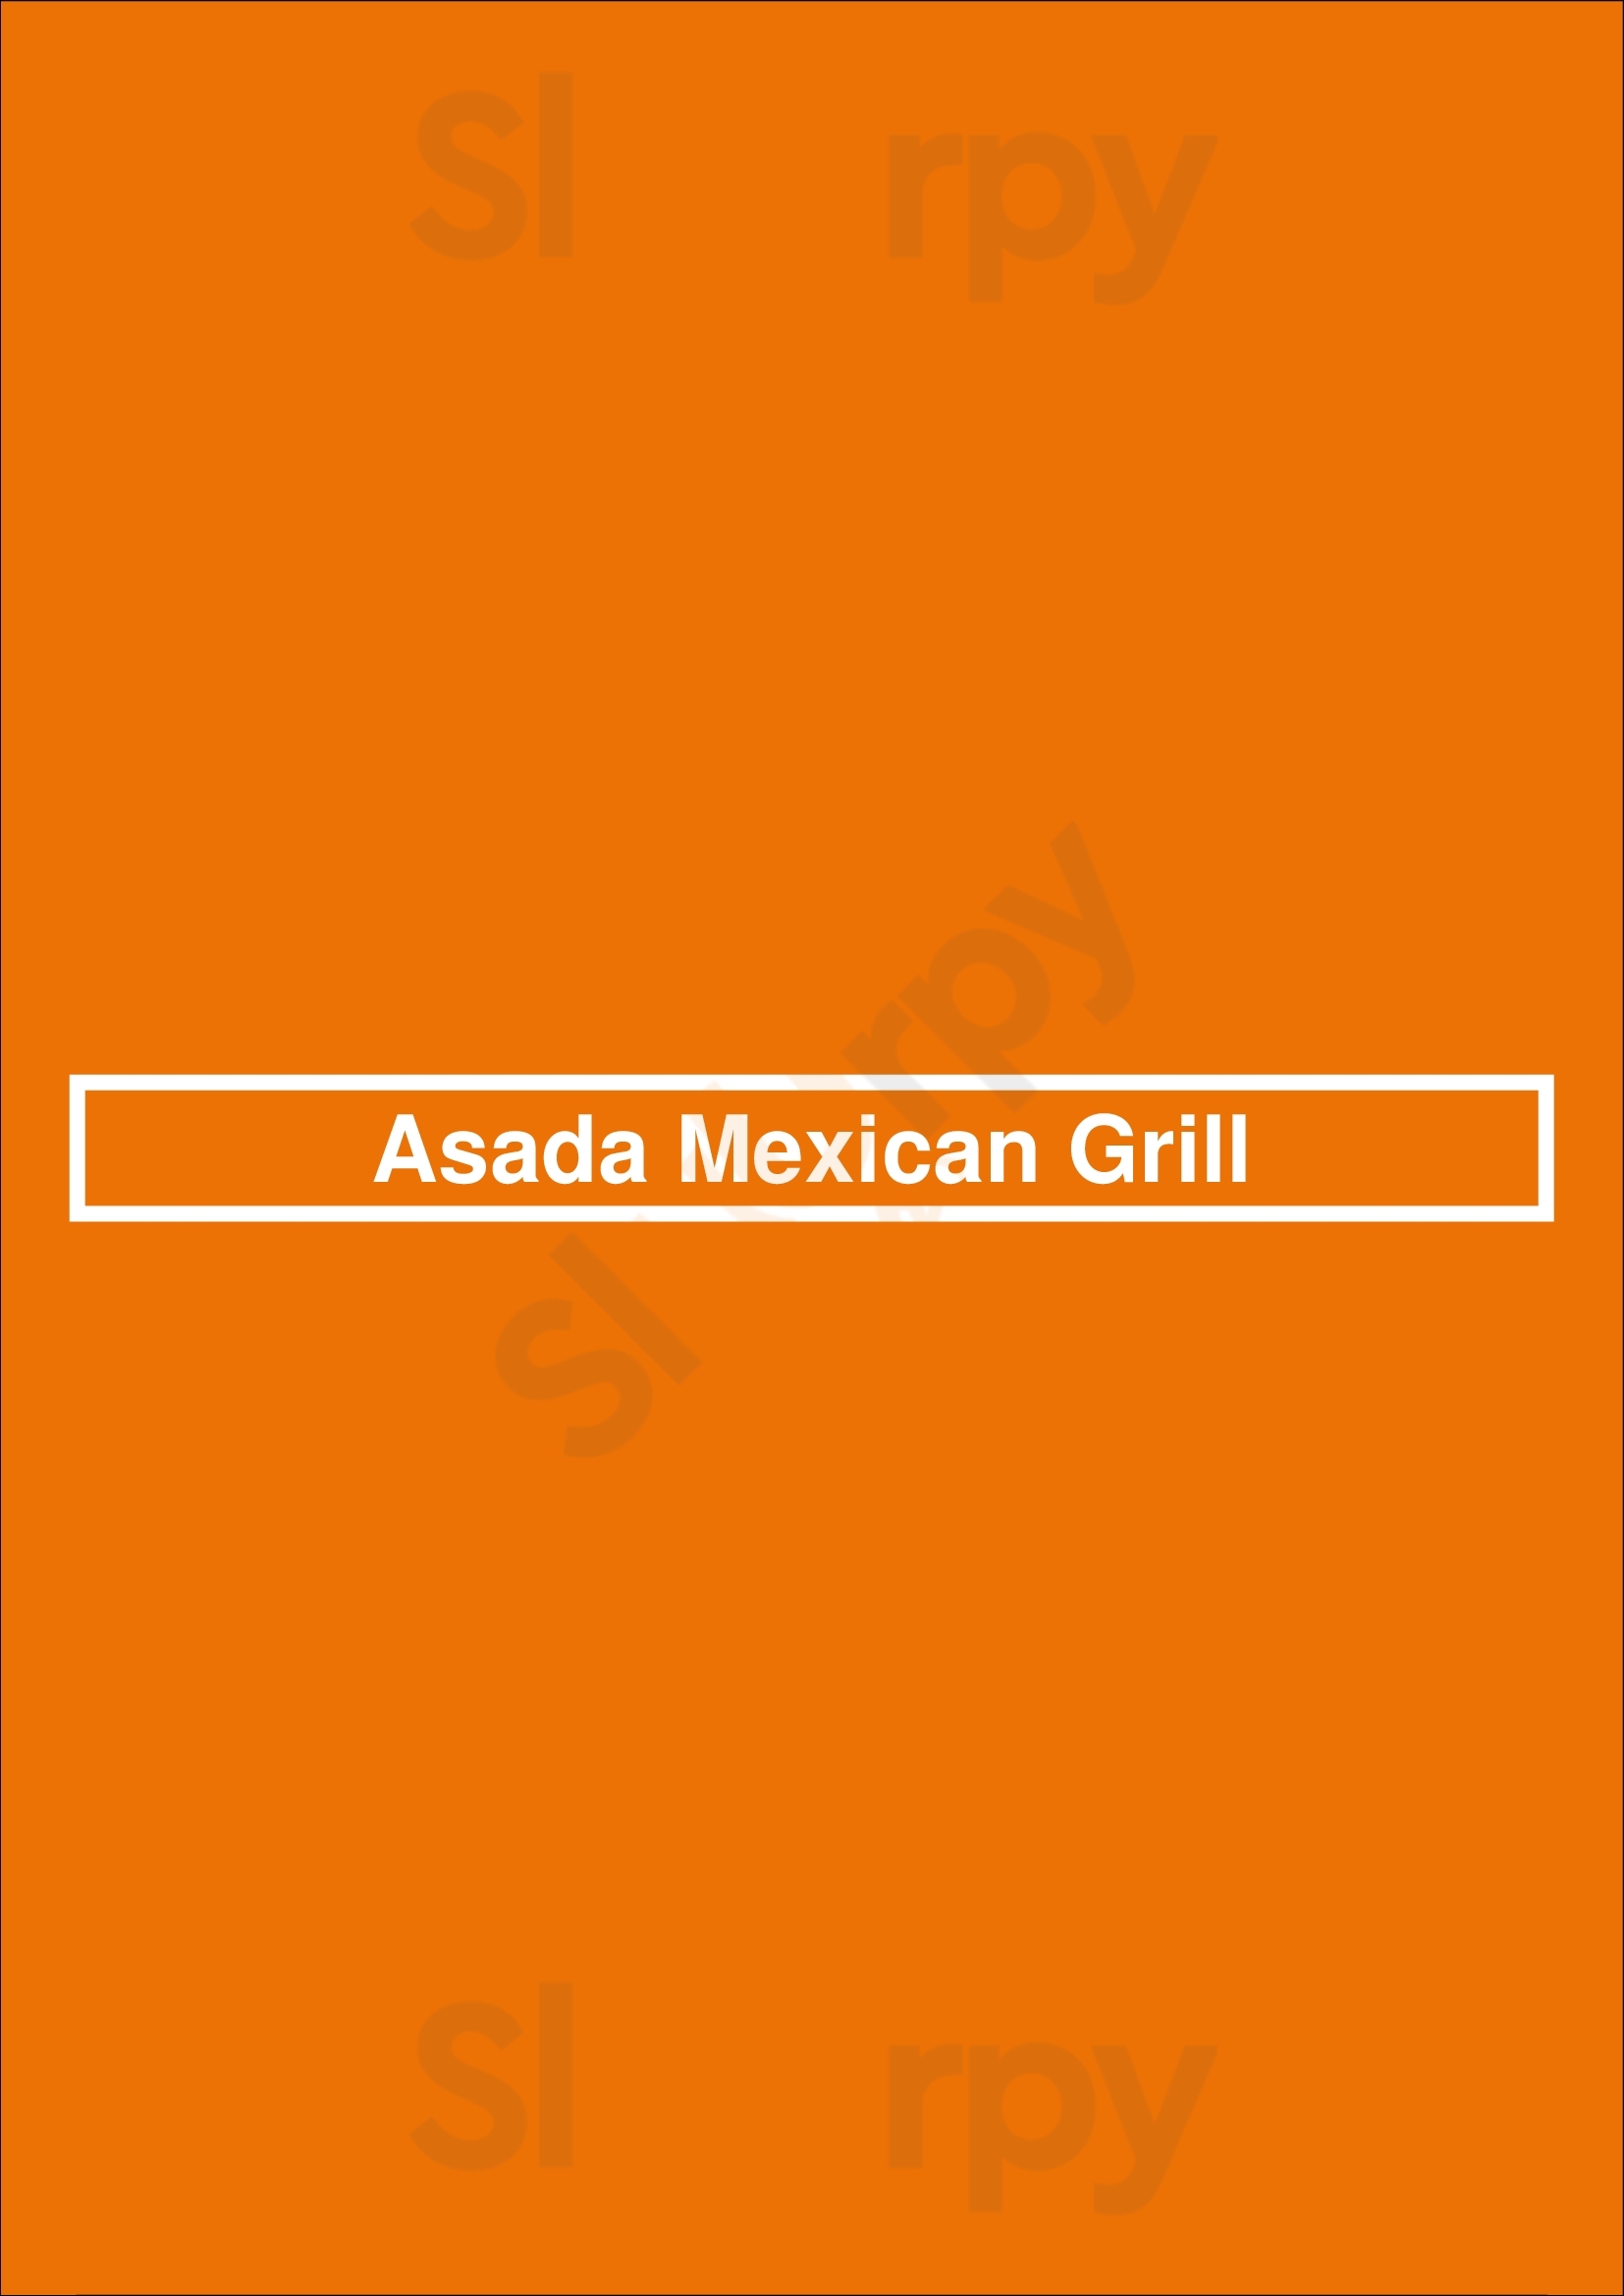 Asada Mexican Grill Chicago Menu - 1